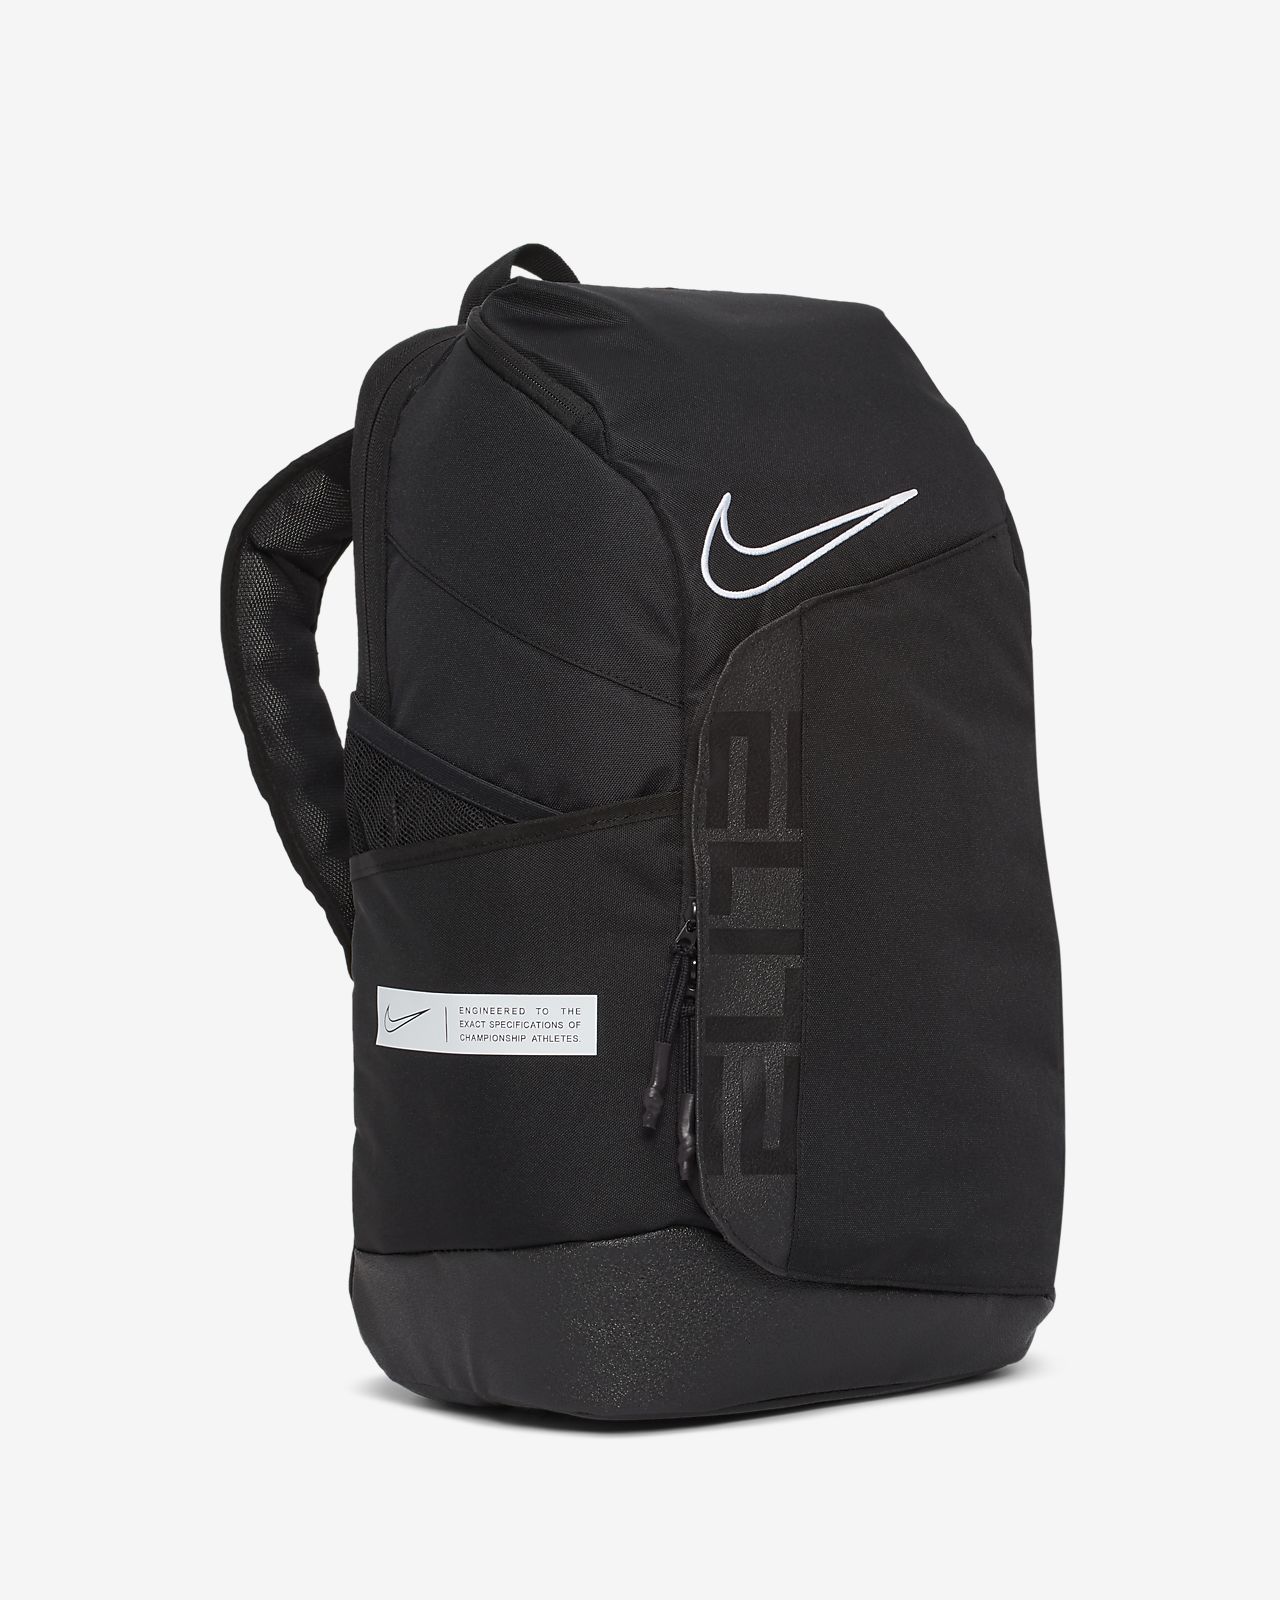 nike elite pro backpack 2020